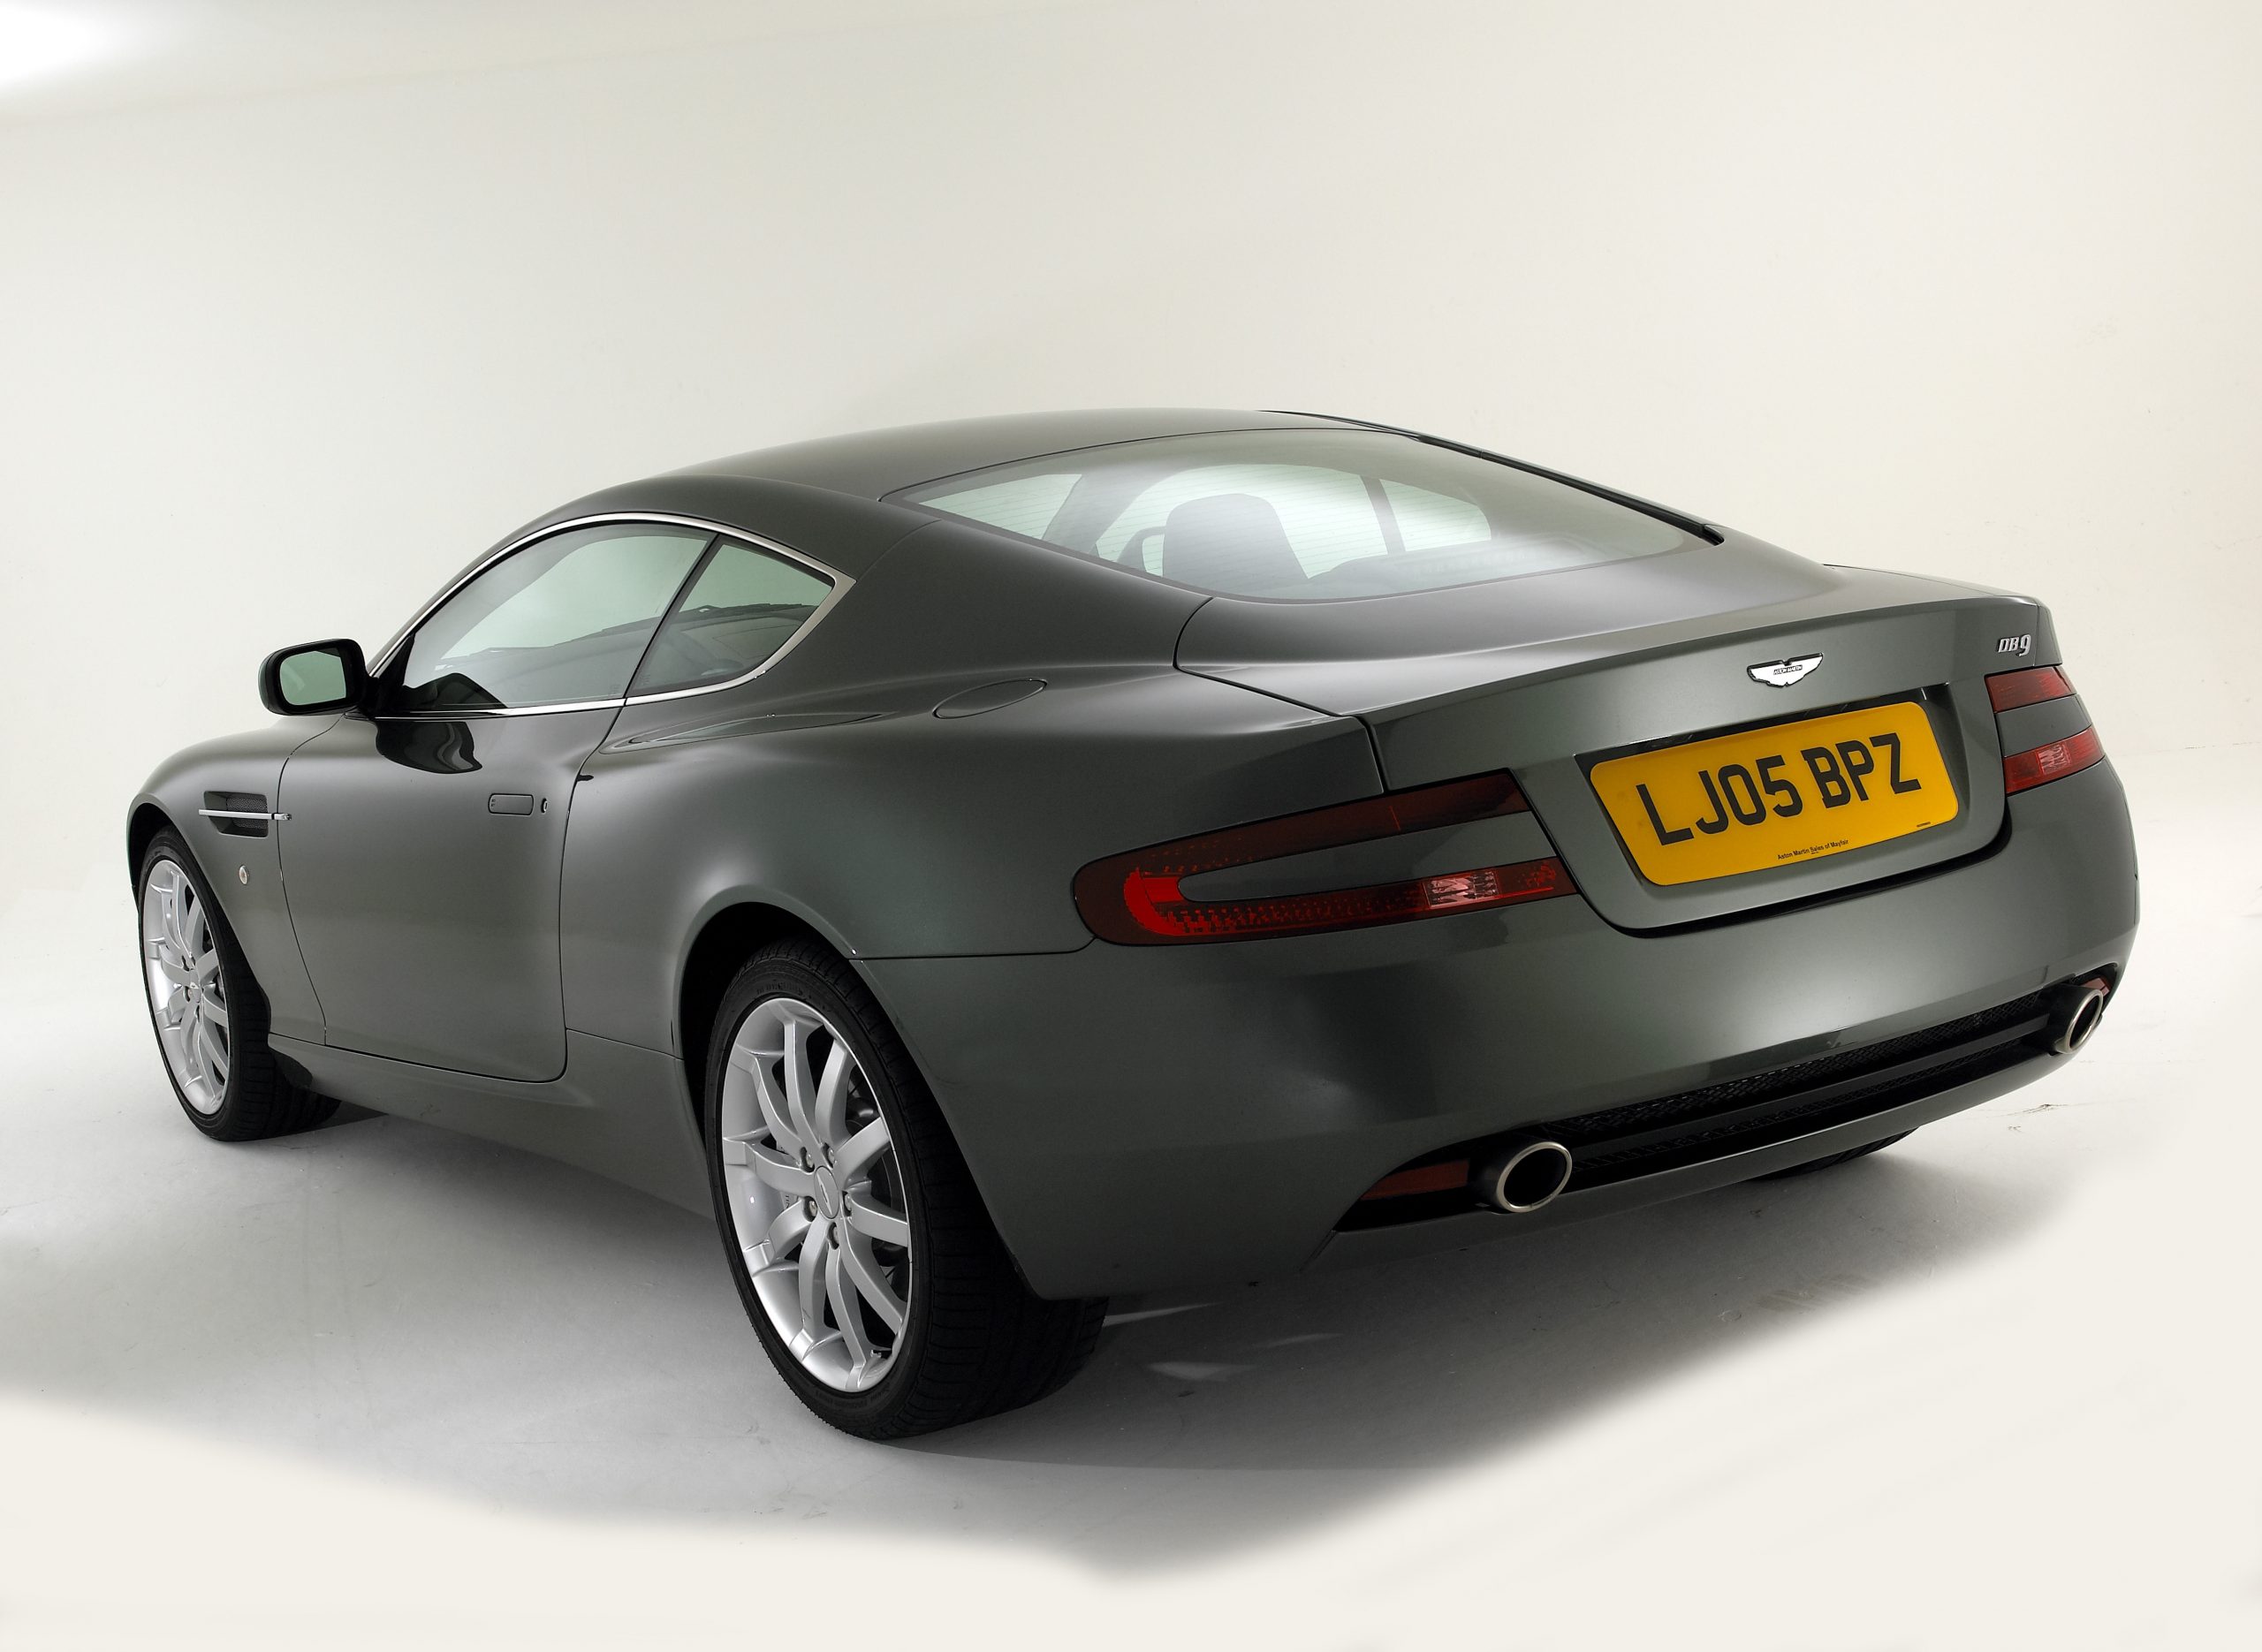 The rear 3/4 of the Aston Martin DB9 shot in a studio